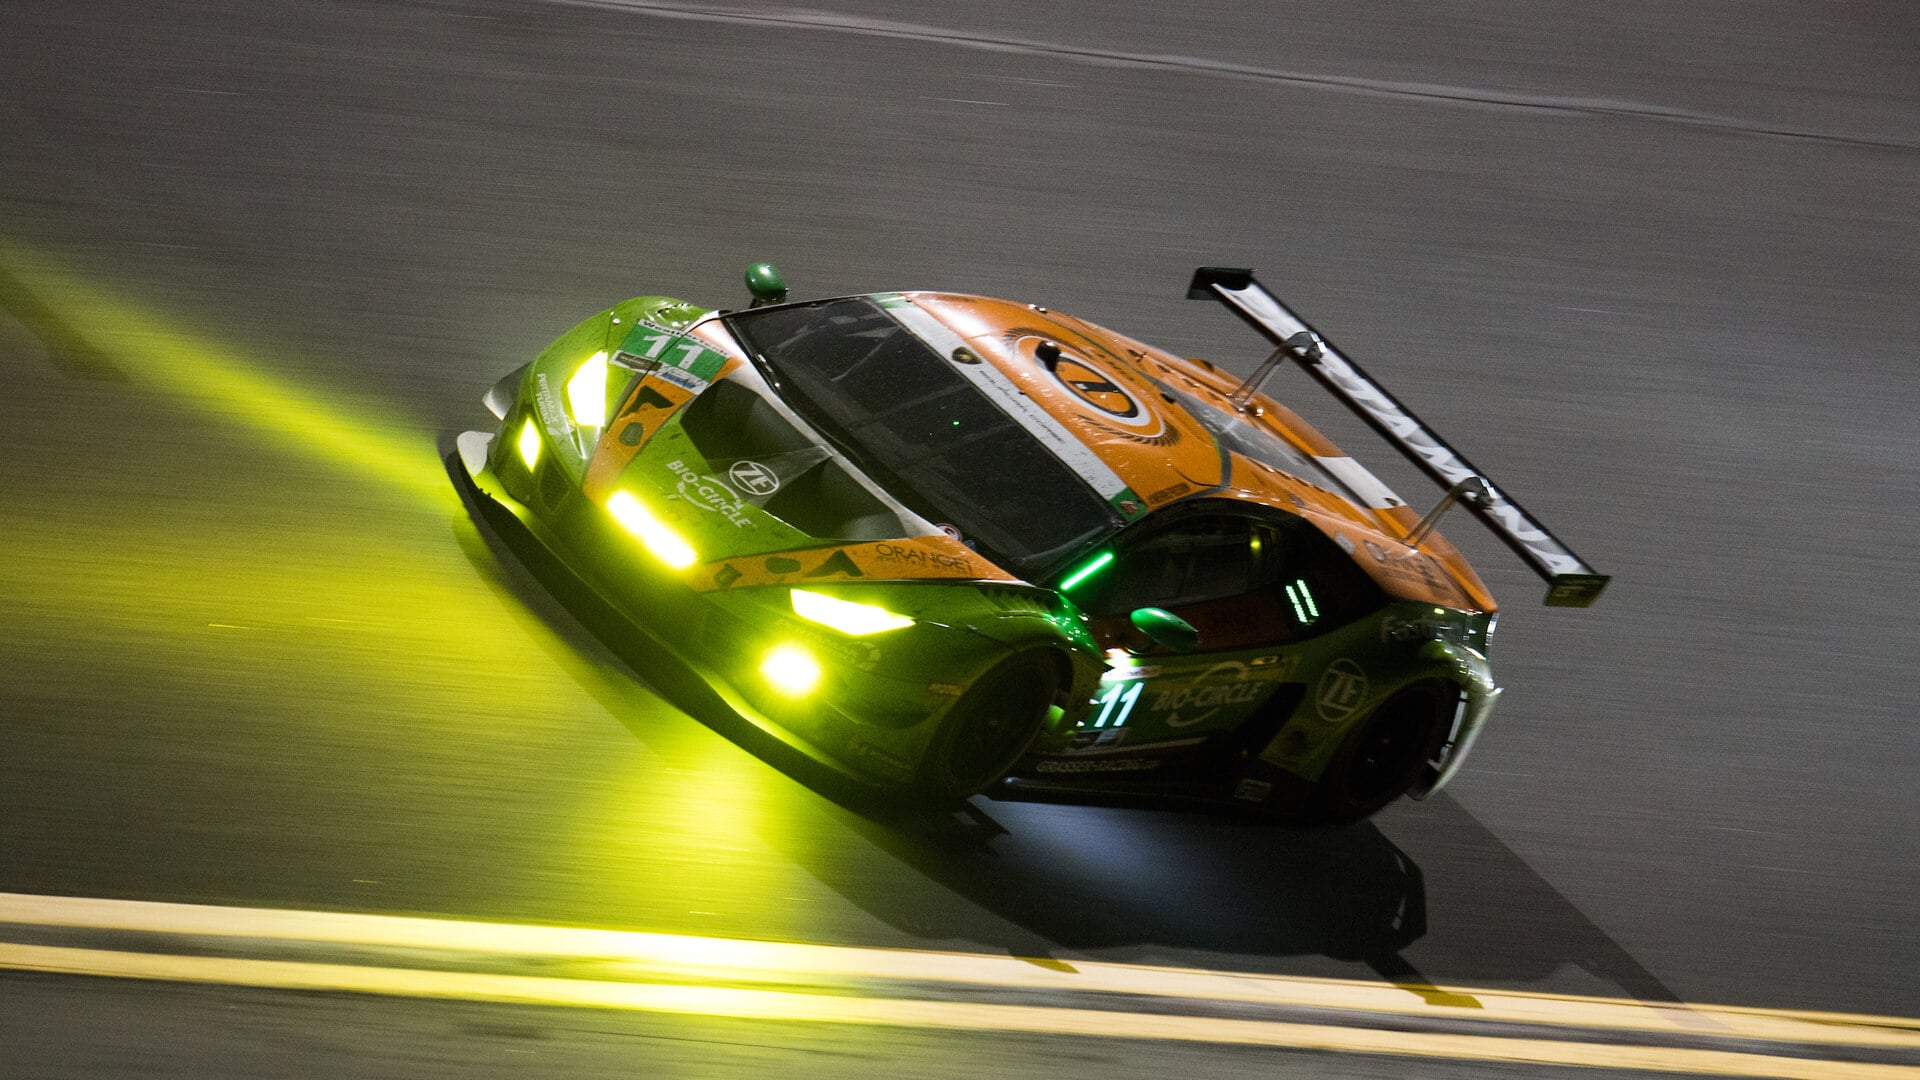 Lamborghini wins 24 Hours of Daytona again and makes history